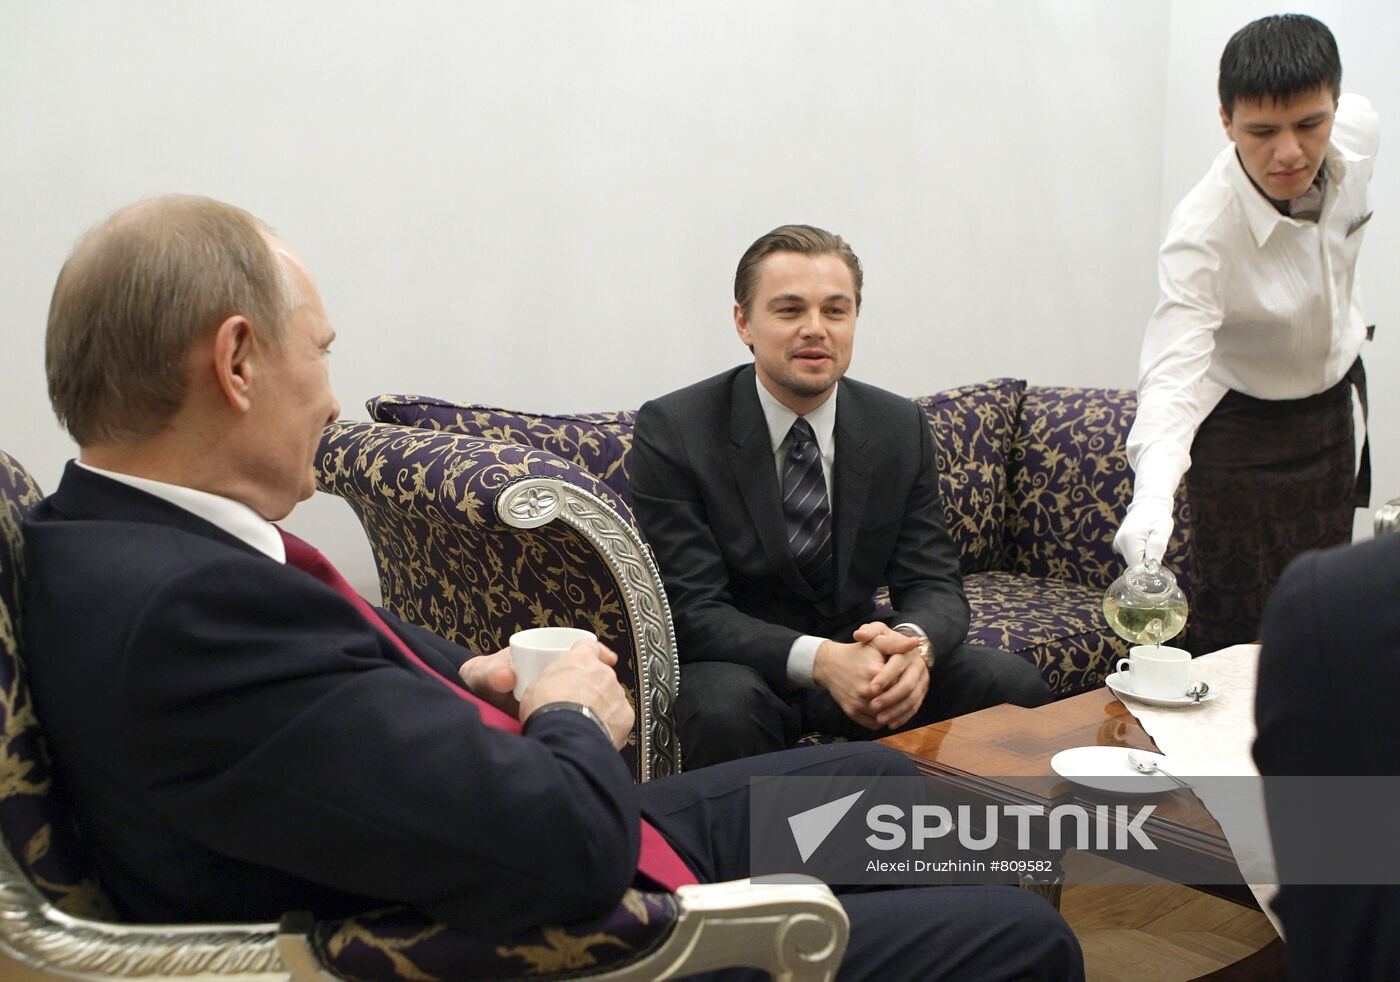 Vladimir Putin meets with Leonardo DiCaprio in St.Petersburg